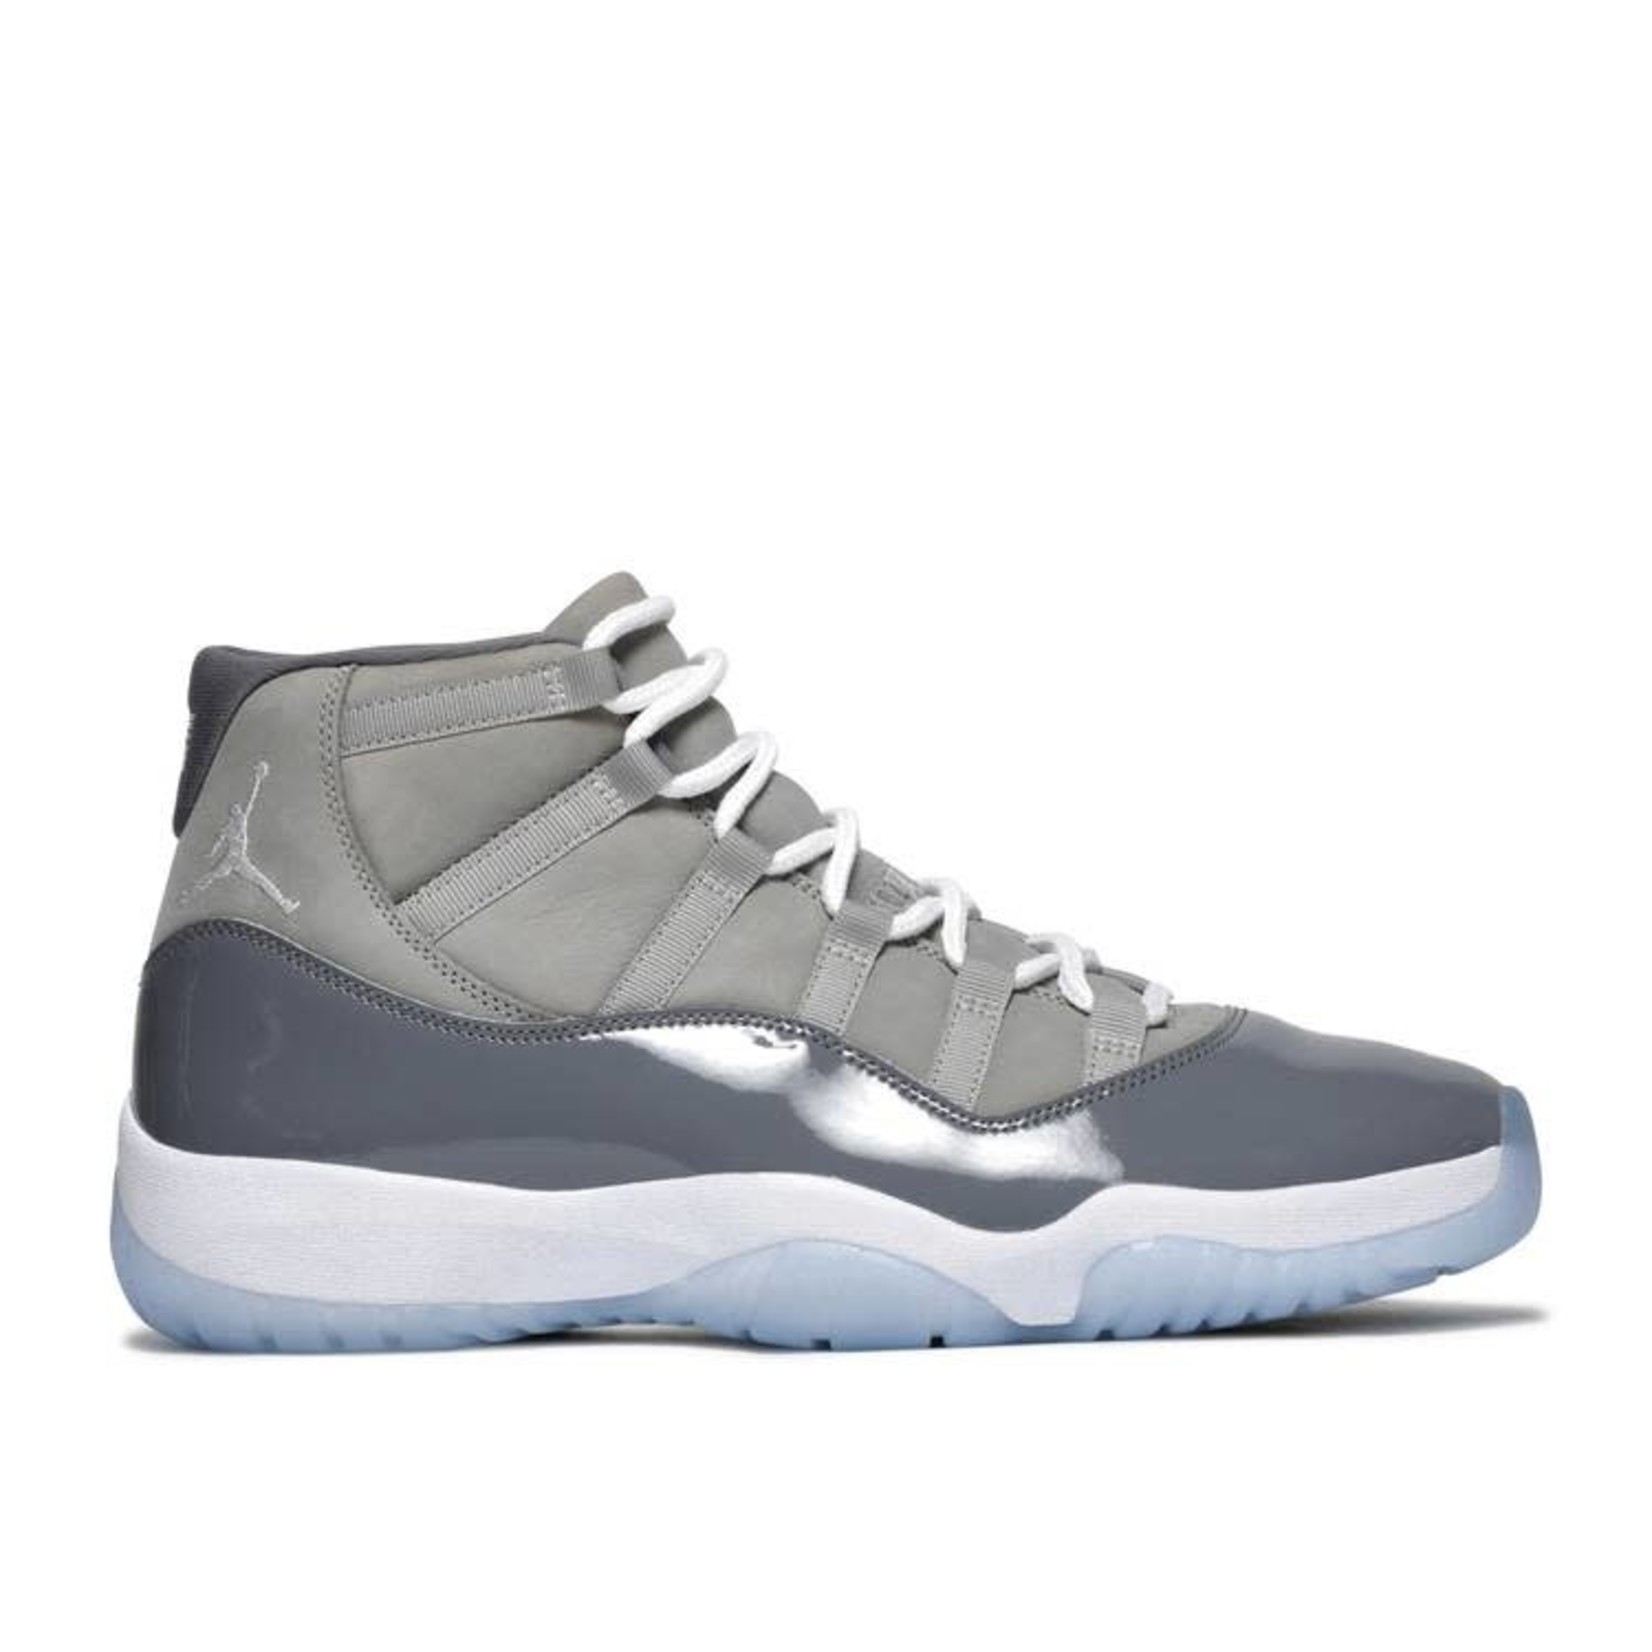 Jordan Jordan 11 Retro Cool Grey (2021) Size 12, DS BRAND NEW